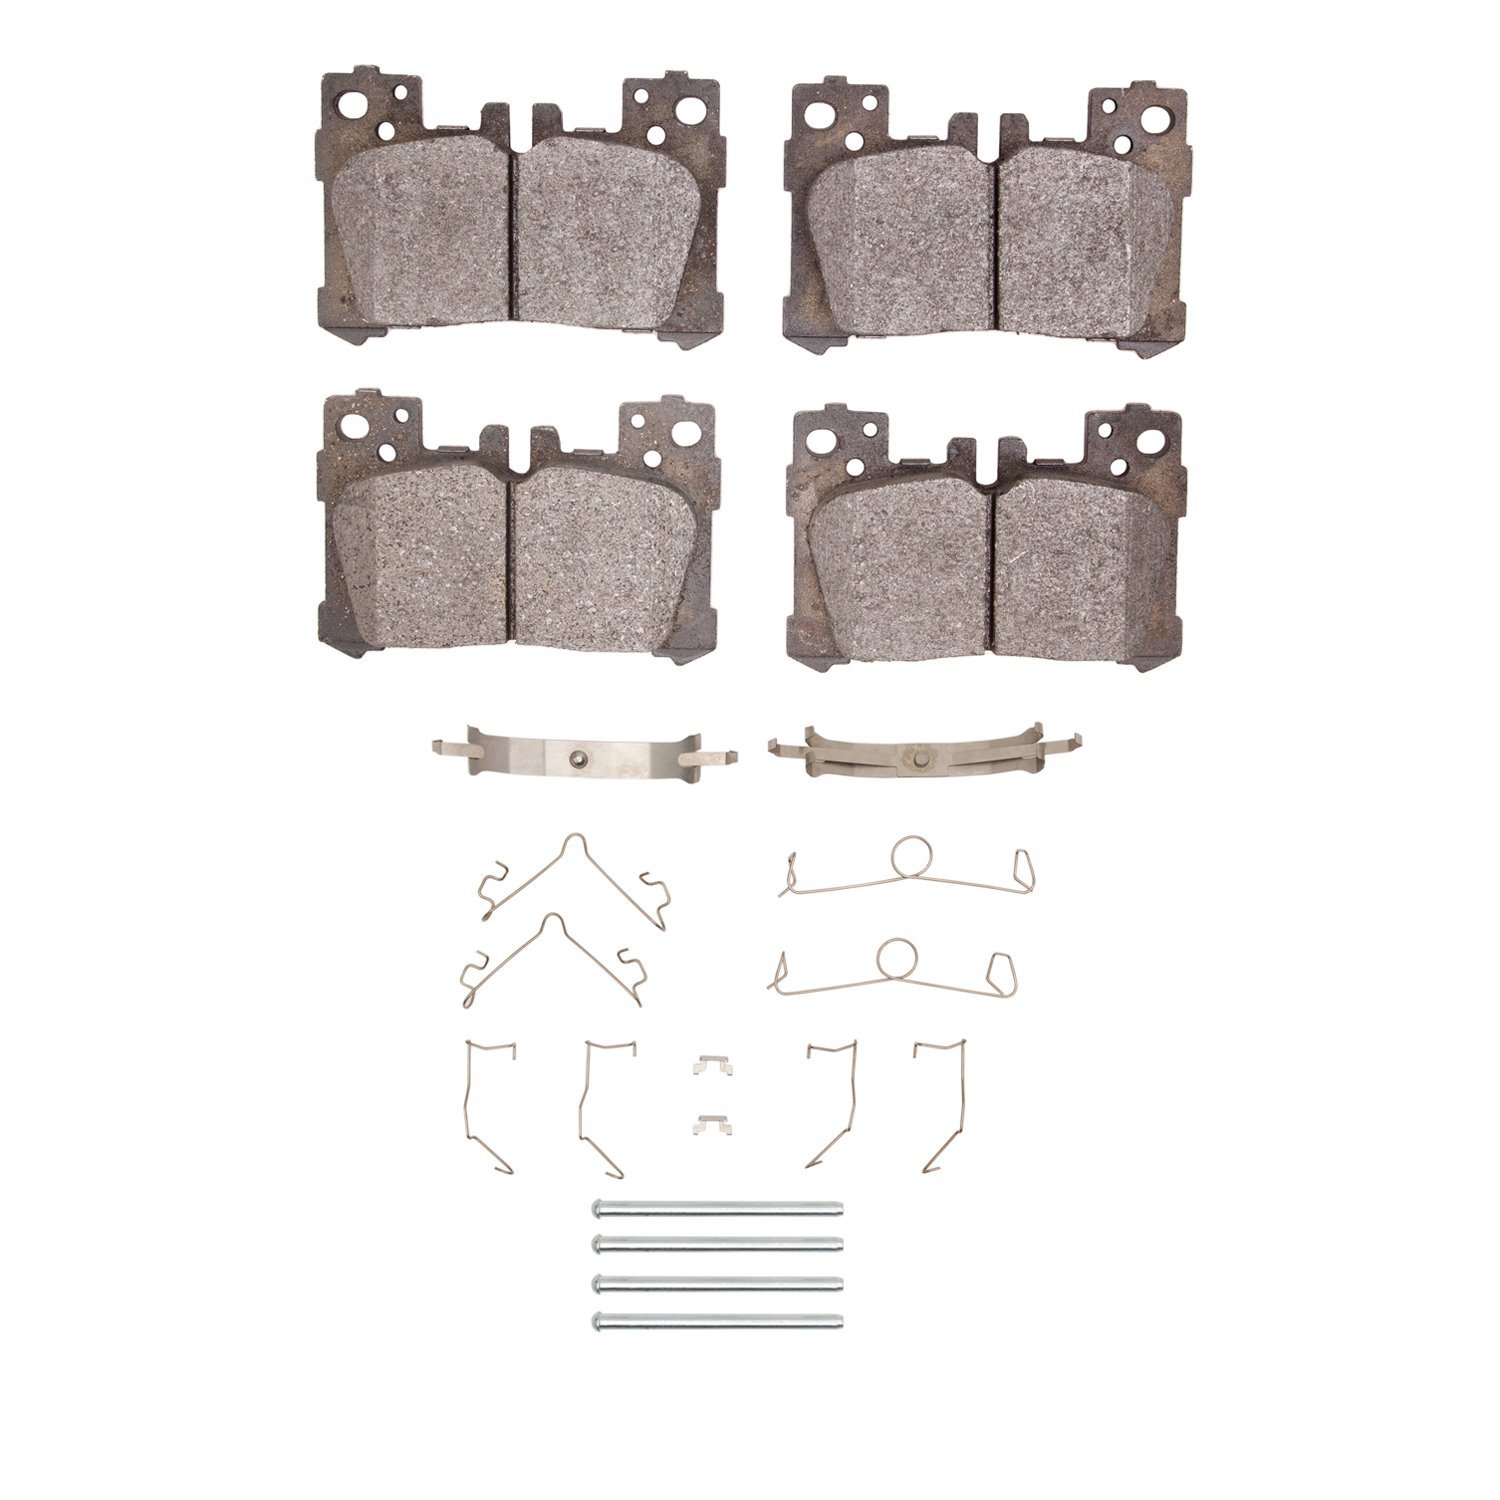 1551-2063-01 5000 Advanced Low-Metallic Brake Pads & Hardware Kit, Fits Select Lexus/Toyota/Scion, Position: Rear